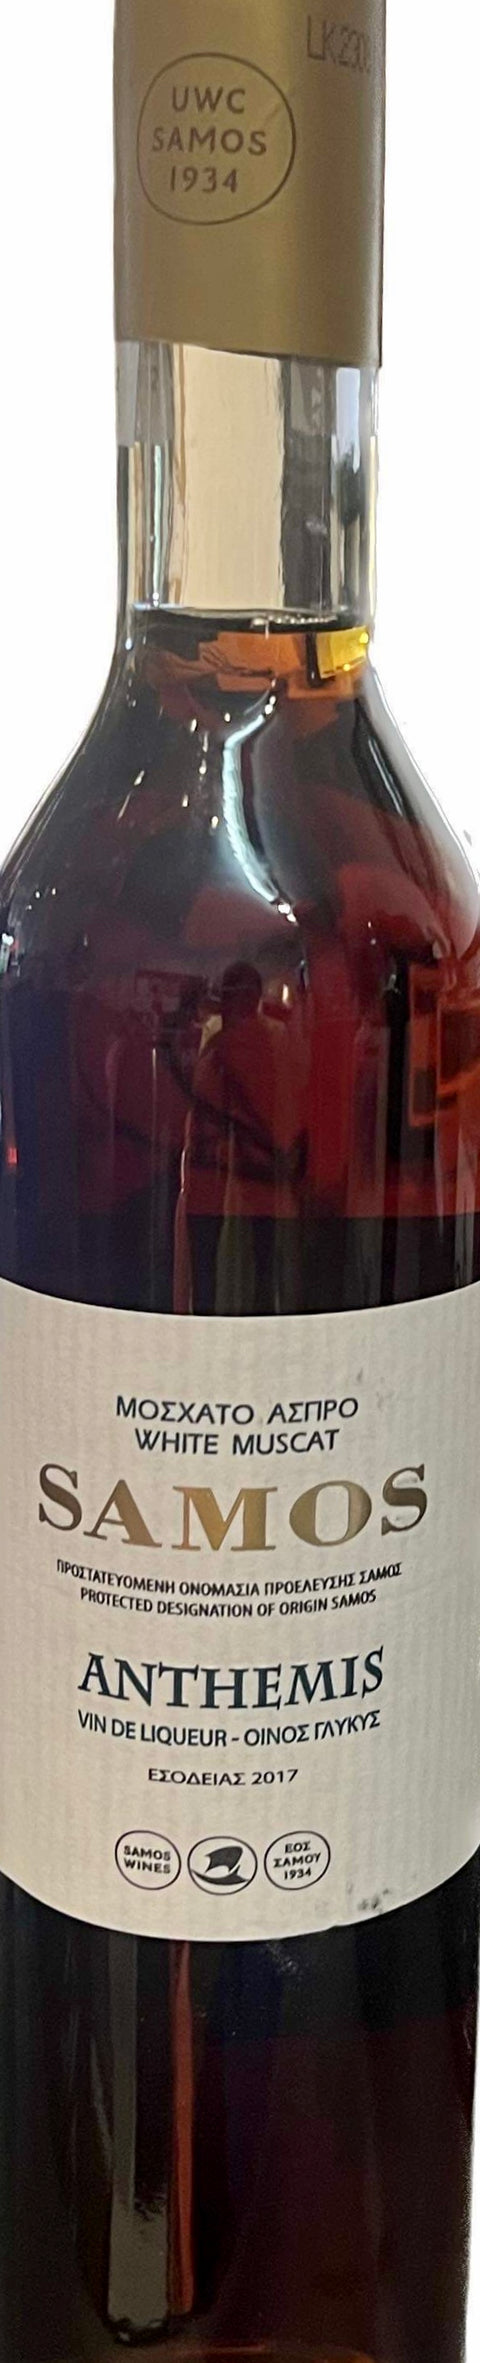 samos Antgemus Greek sweet dessert wine, 2016, Liquid Gold Products 